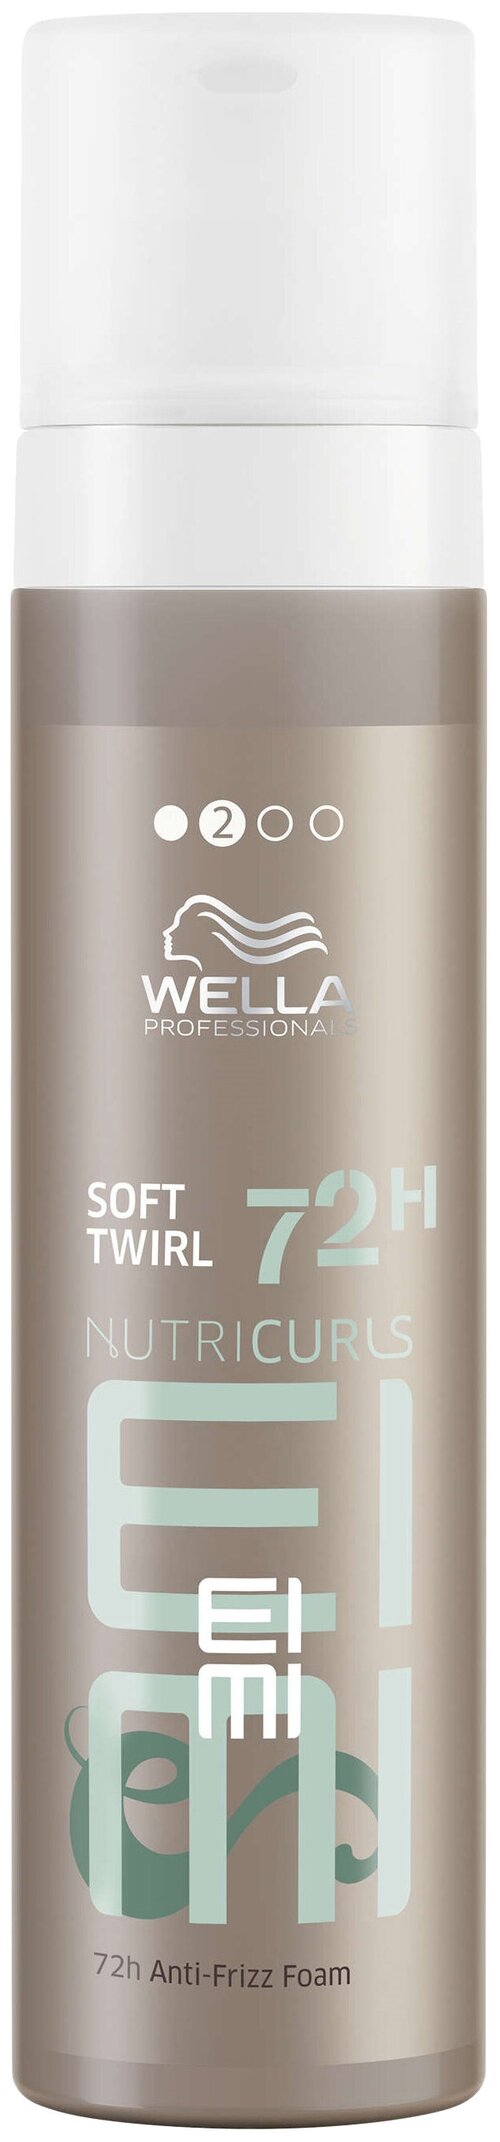 Wella Professionals мусс для волос Nutricurls Eimi Soft Twirl, 200 мл, 260 г